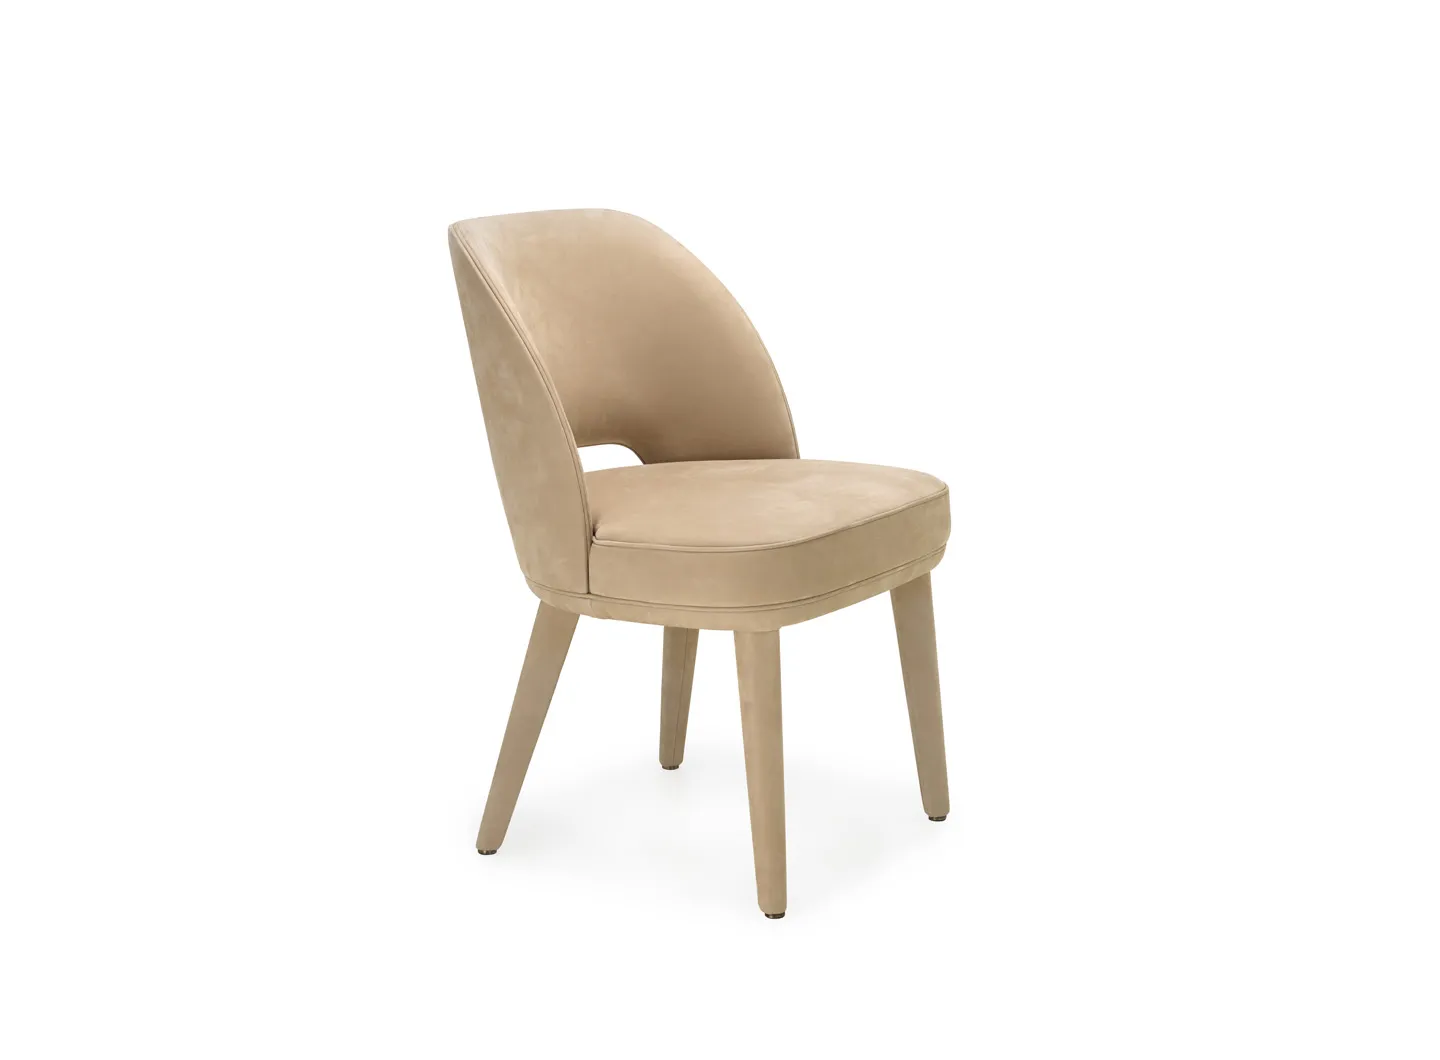 Arcahorn - Penelope Chair in Nabuk